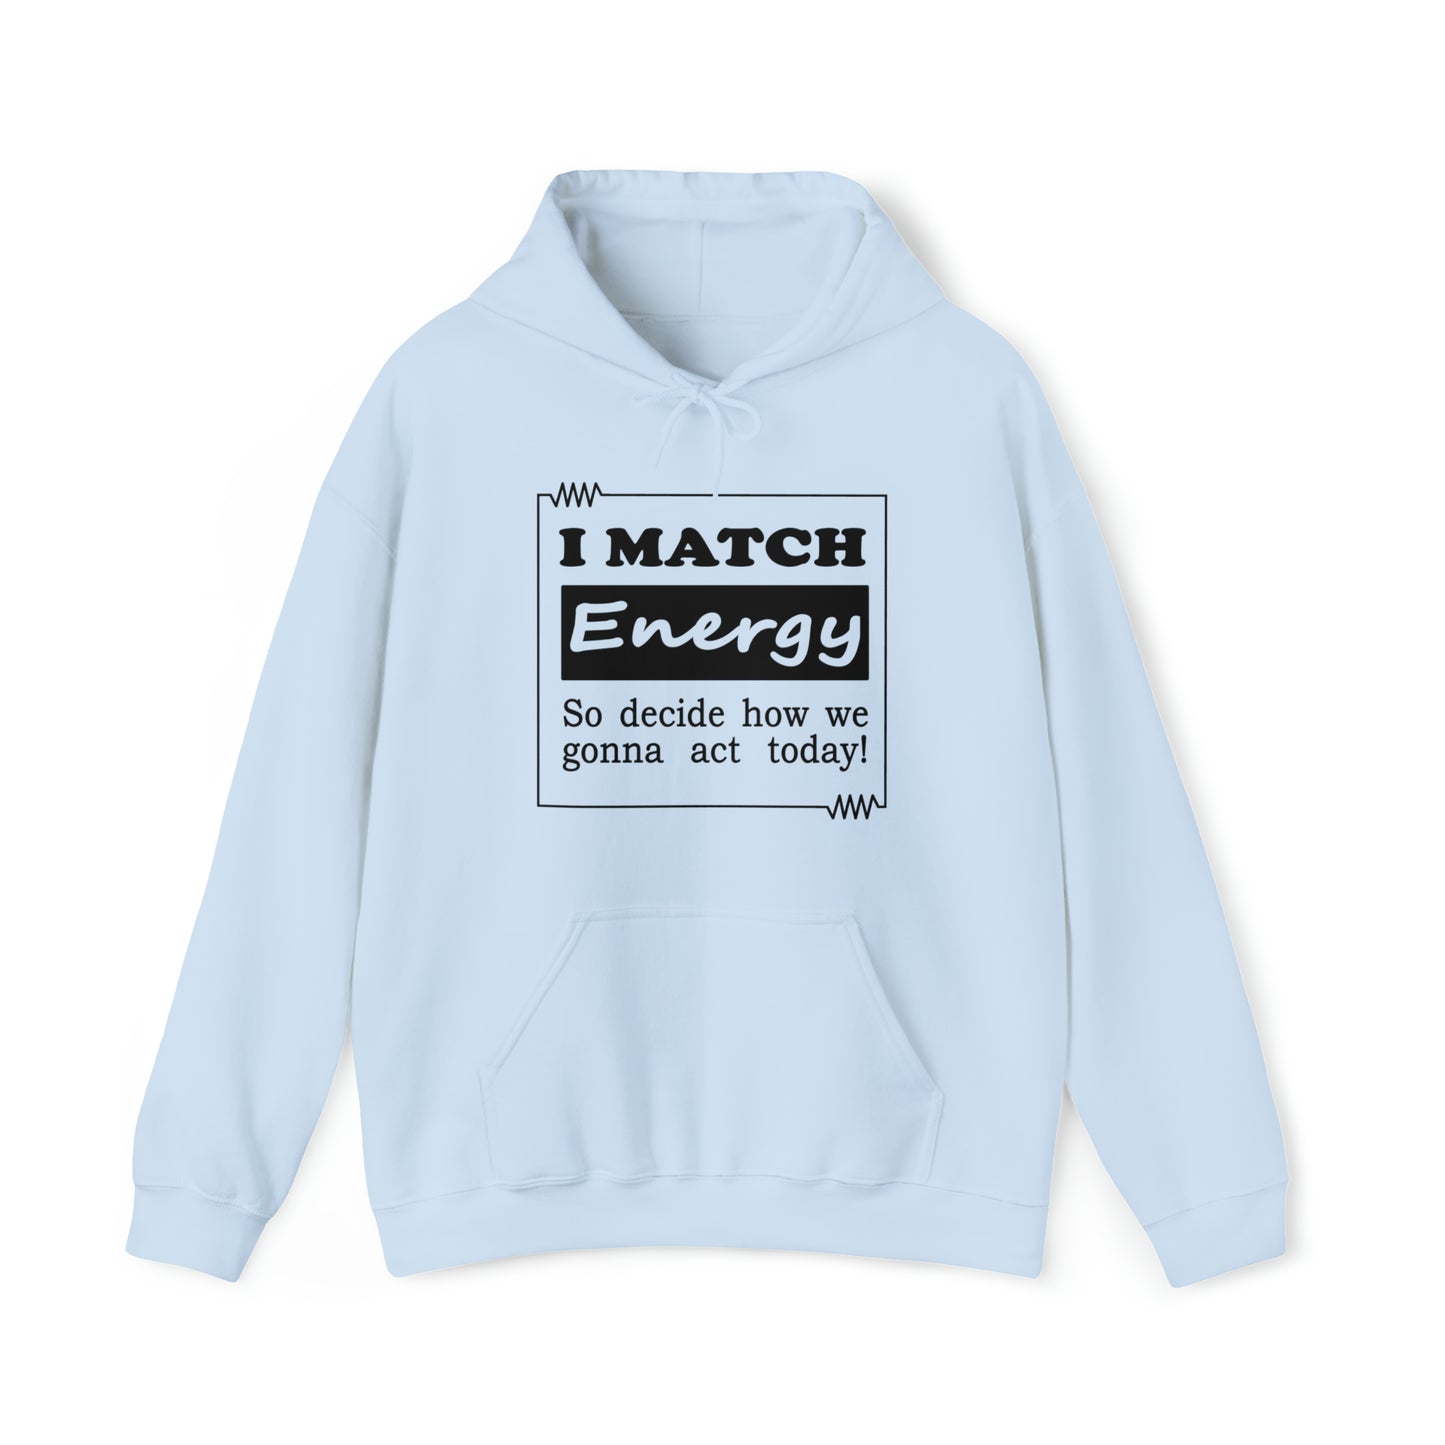 I Match Energy Hoodie - Black Text